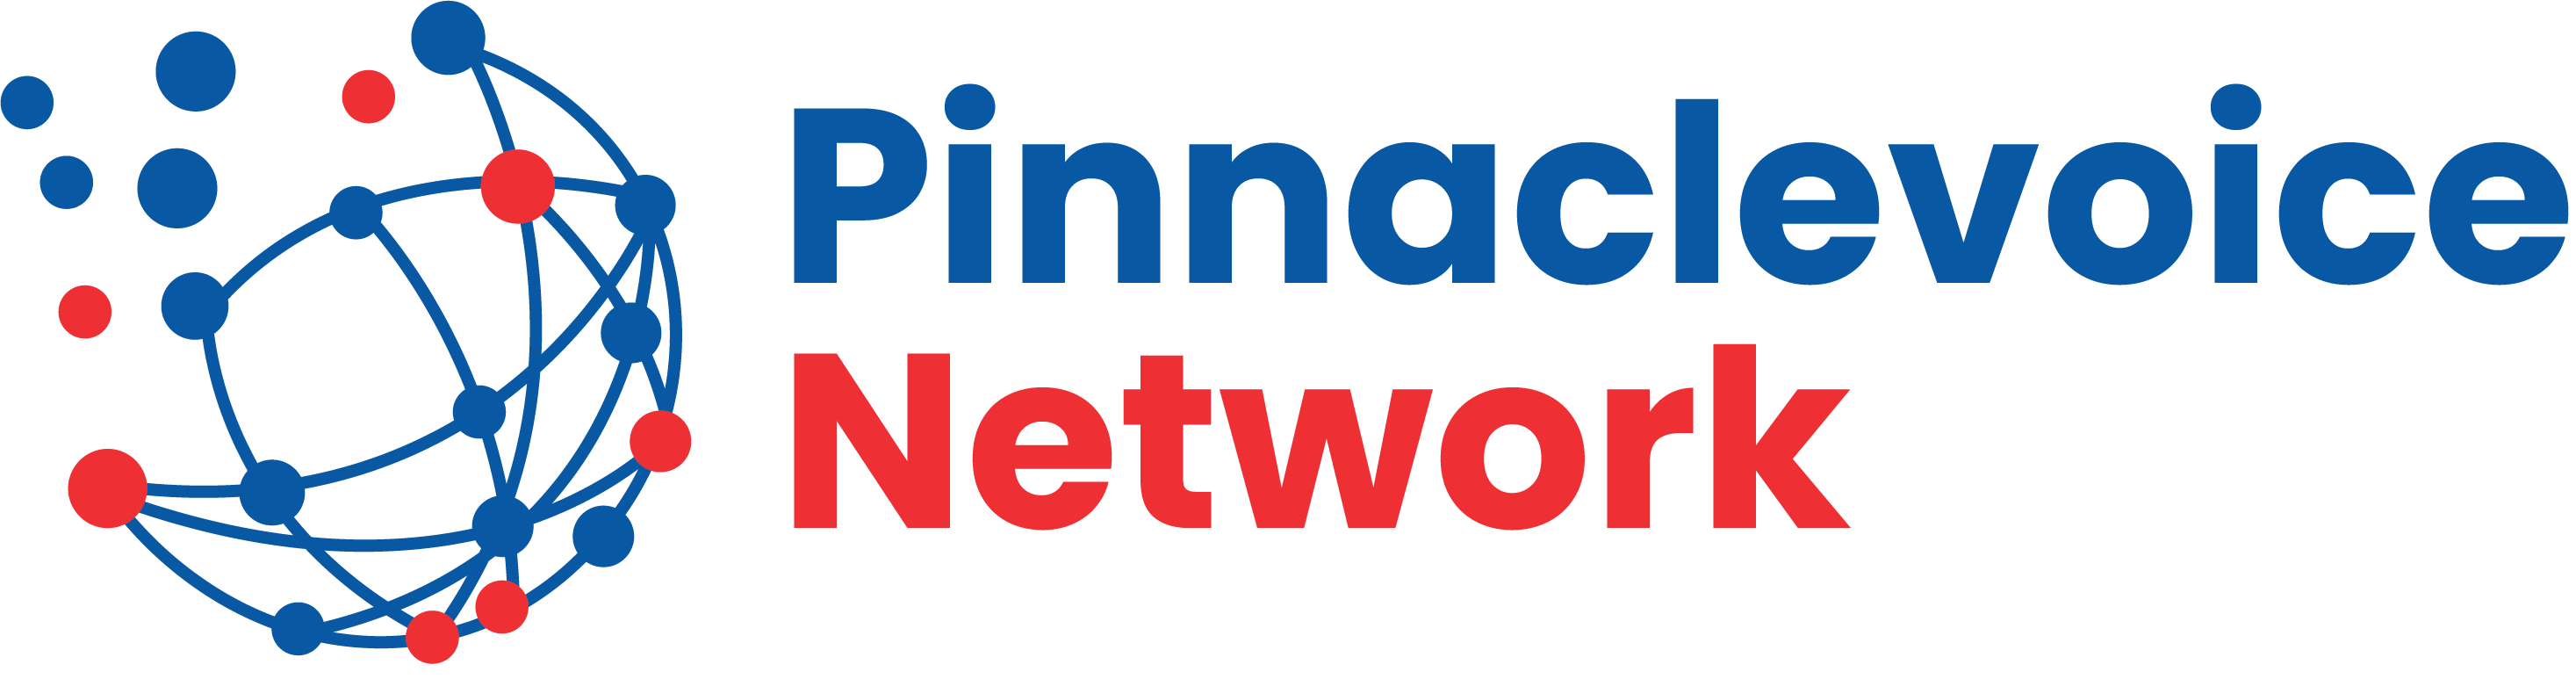 PinnacleVoice Networks LLC original logo